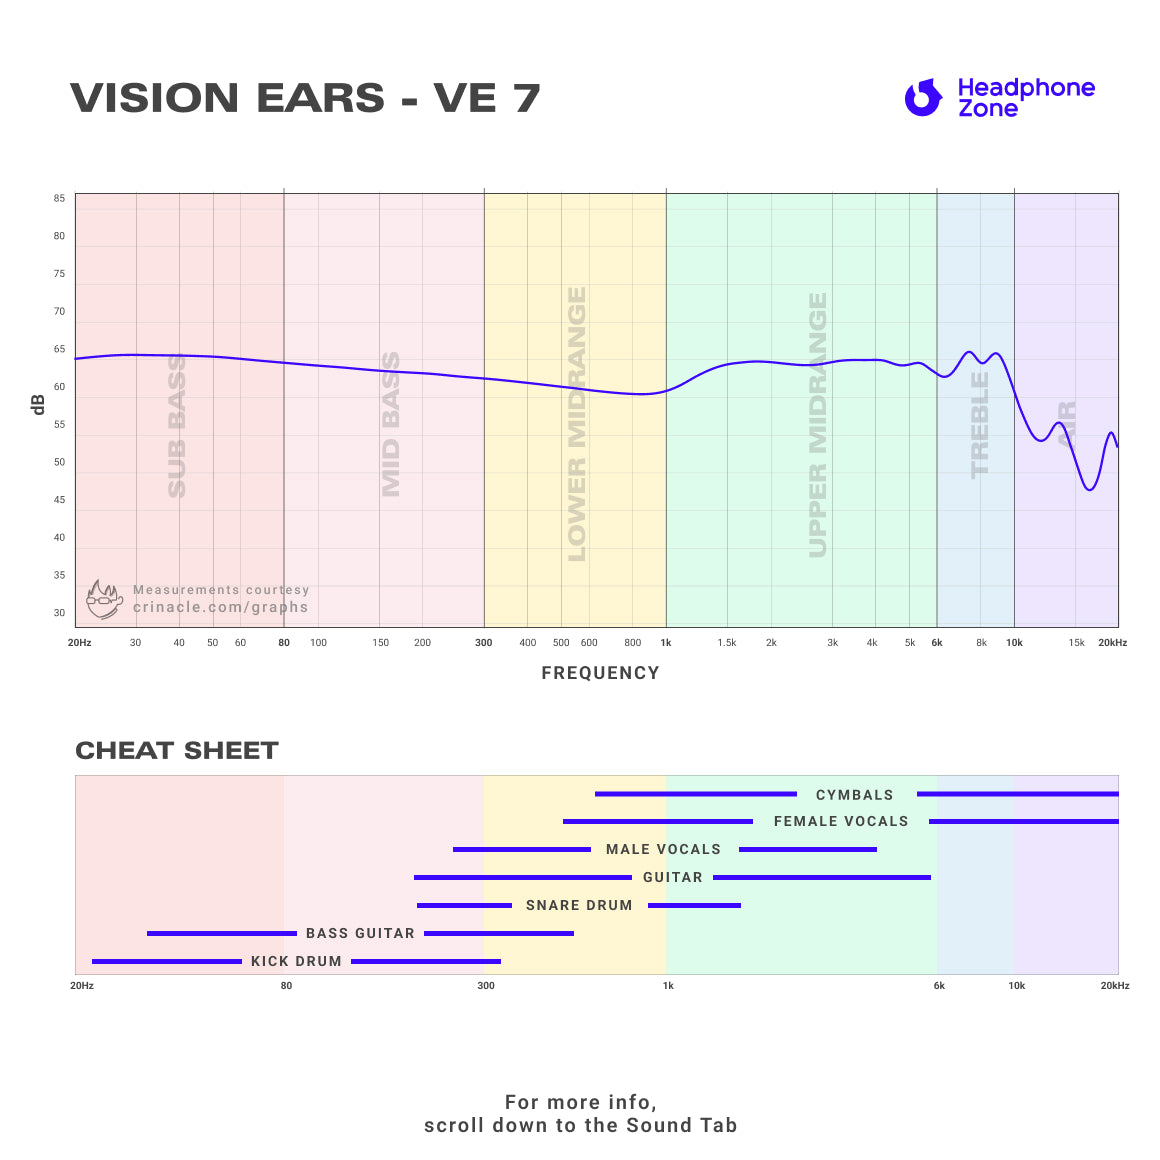 Vision Ears - VE 7